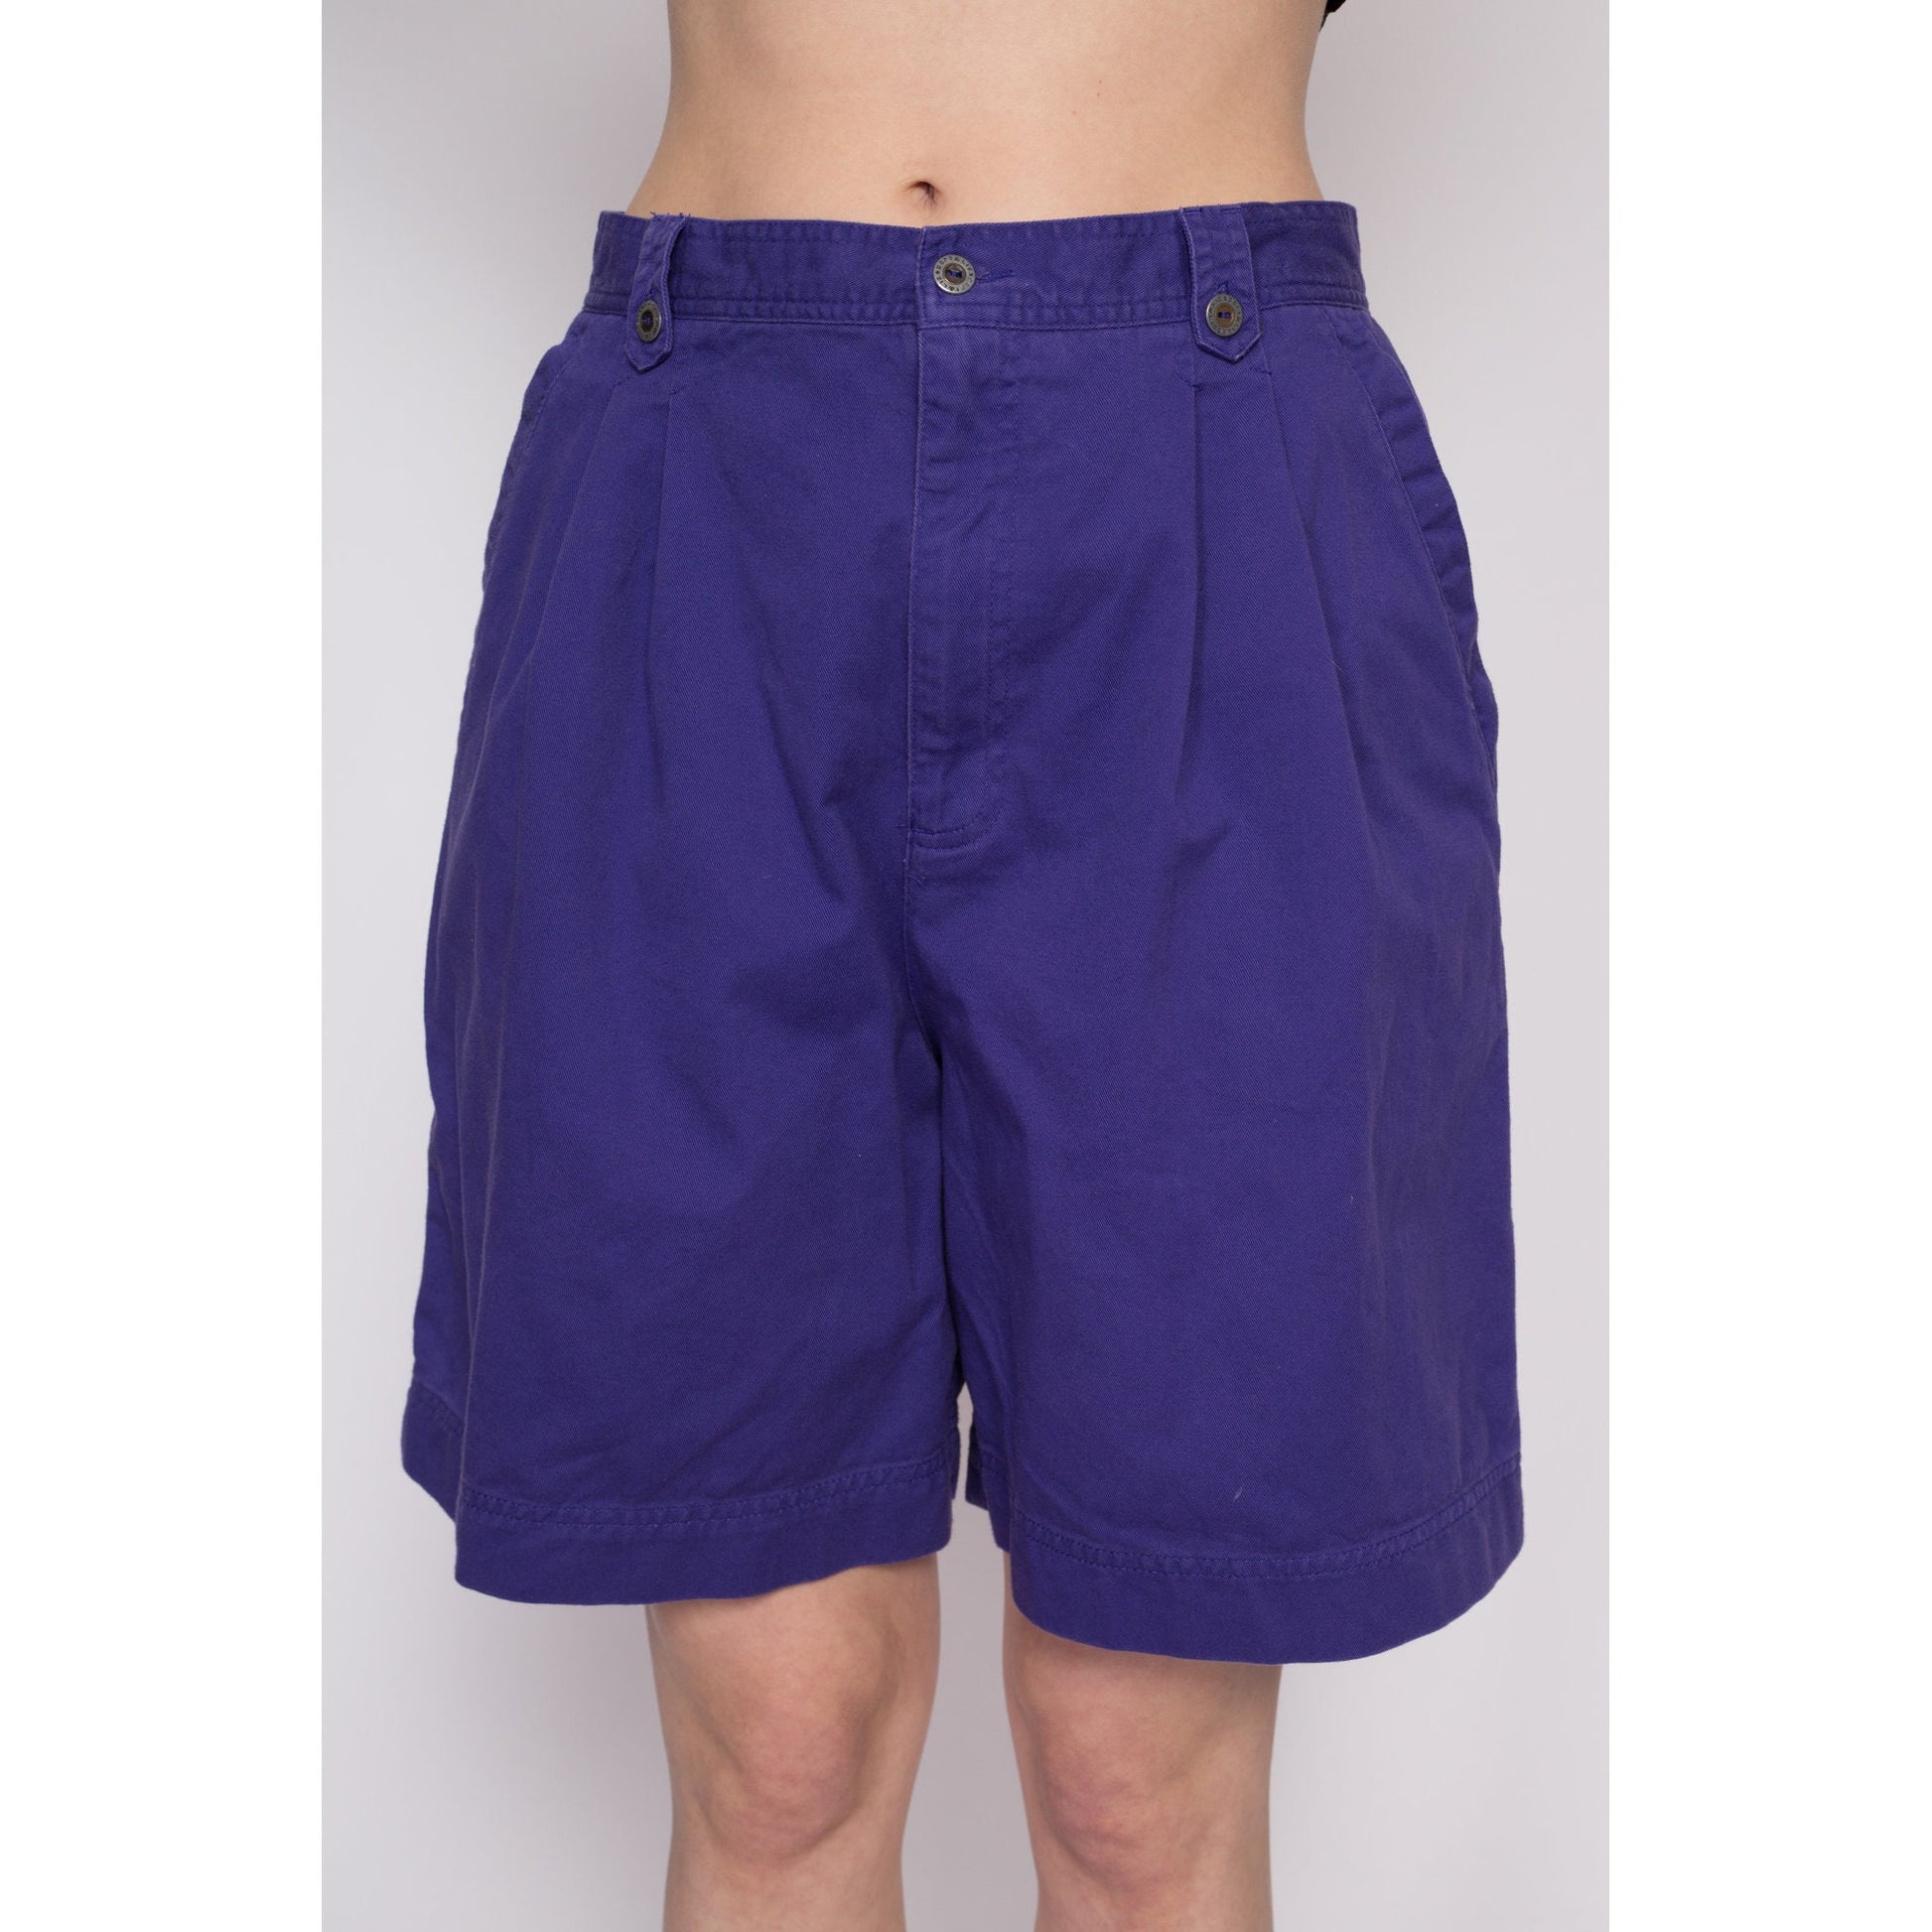 90s Lizwear Purple High Waisted Shorts - Medium to Large, 30